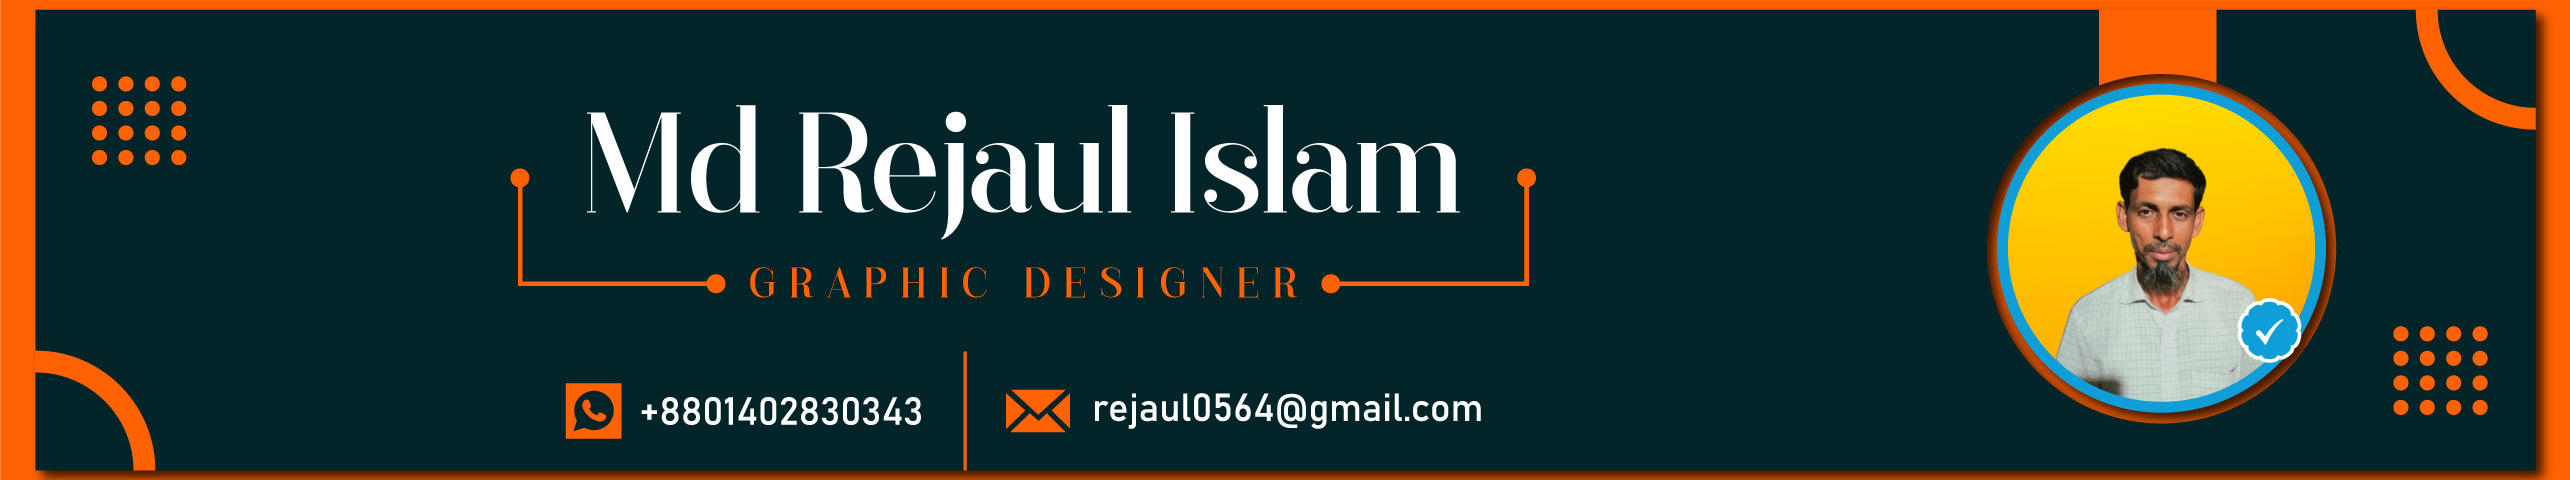 Profielbanner van Md Rejaul Islam